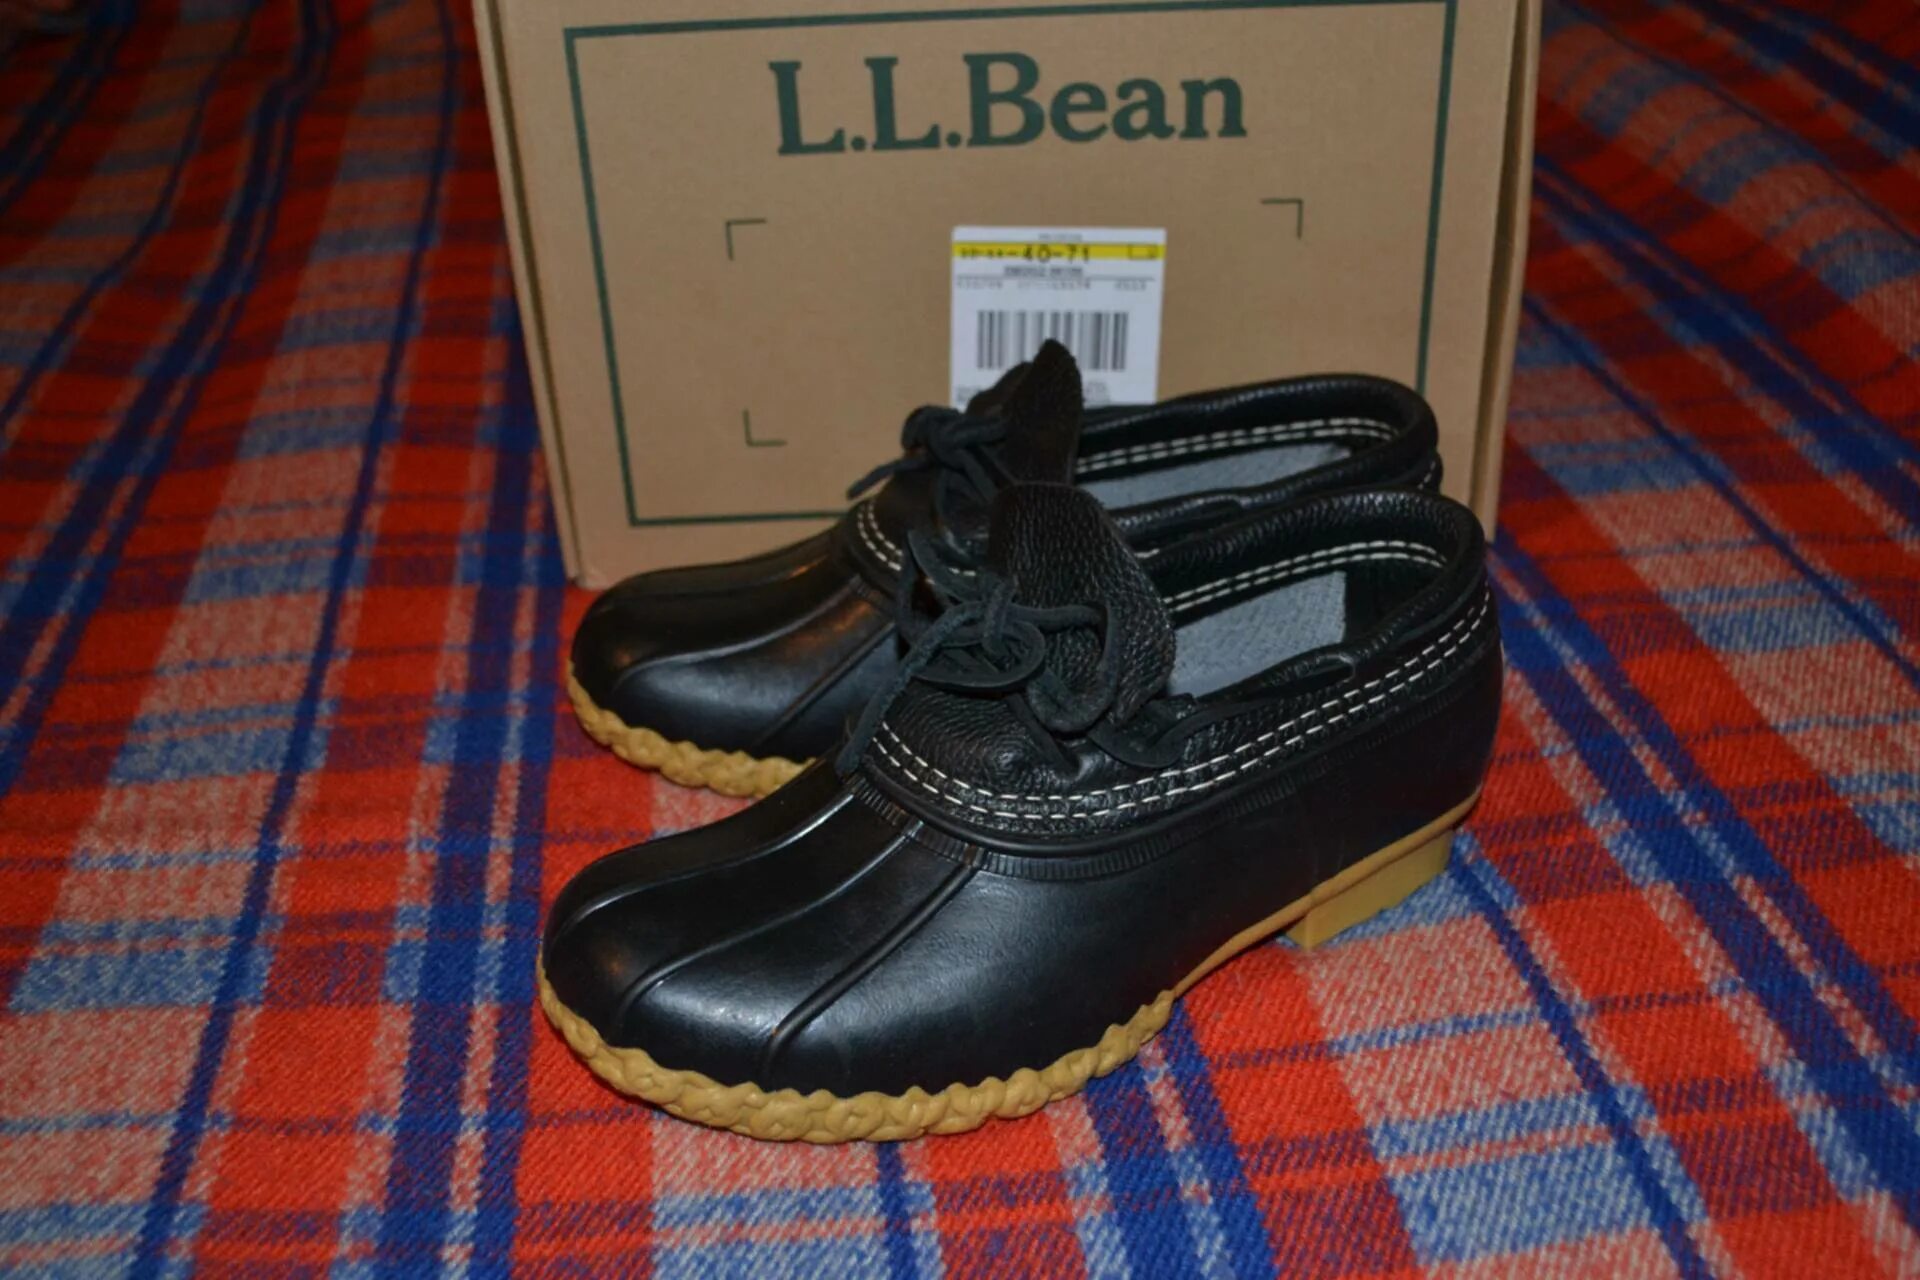 Спб авито купить обувь. Ботинки Boot LBEAN. Ботинки l.l.Bean. Ll Bean ботинки зимние. Лягушки обувь мужская.